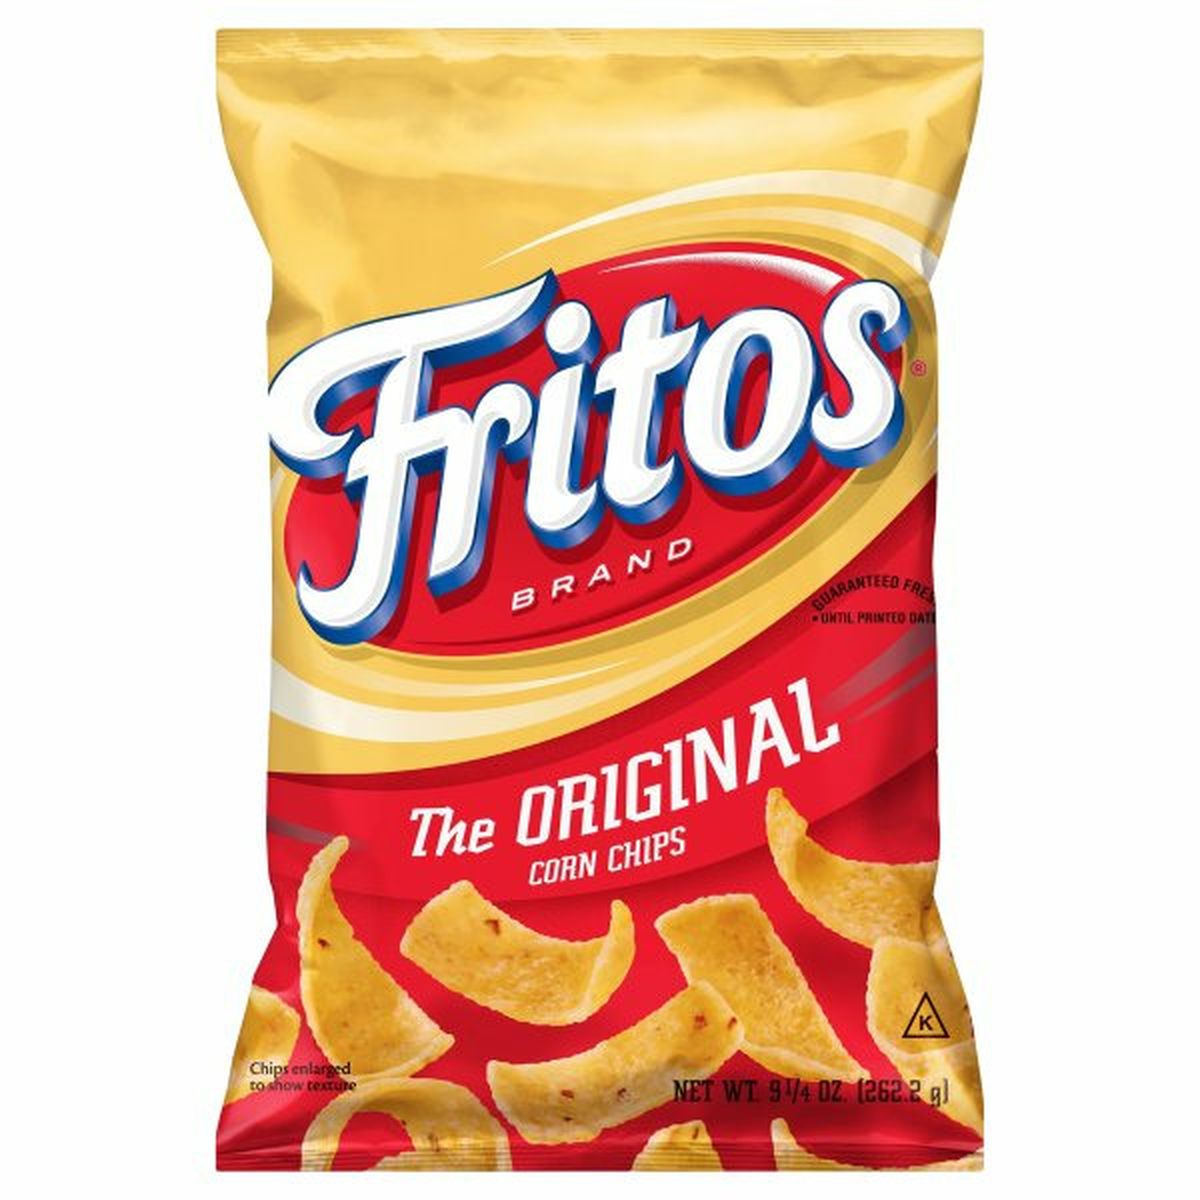 Calories in Fritos Corn Chips, The Original